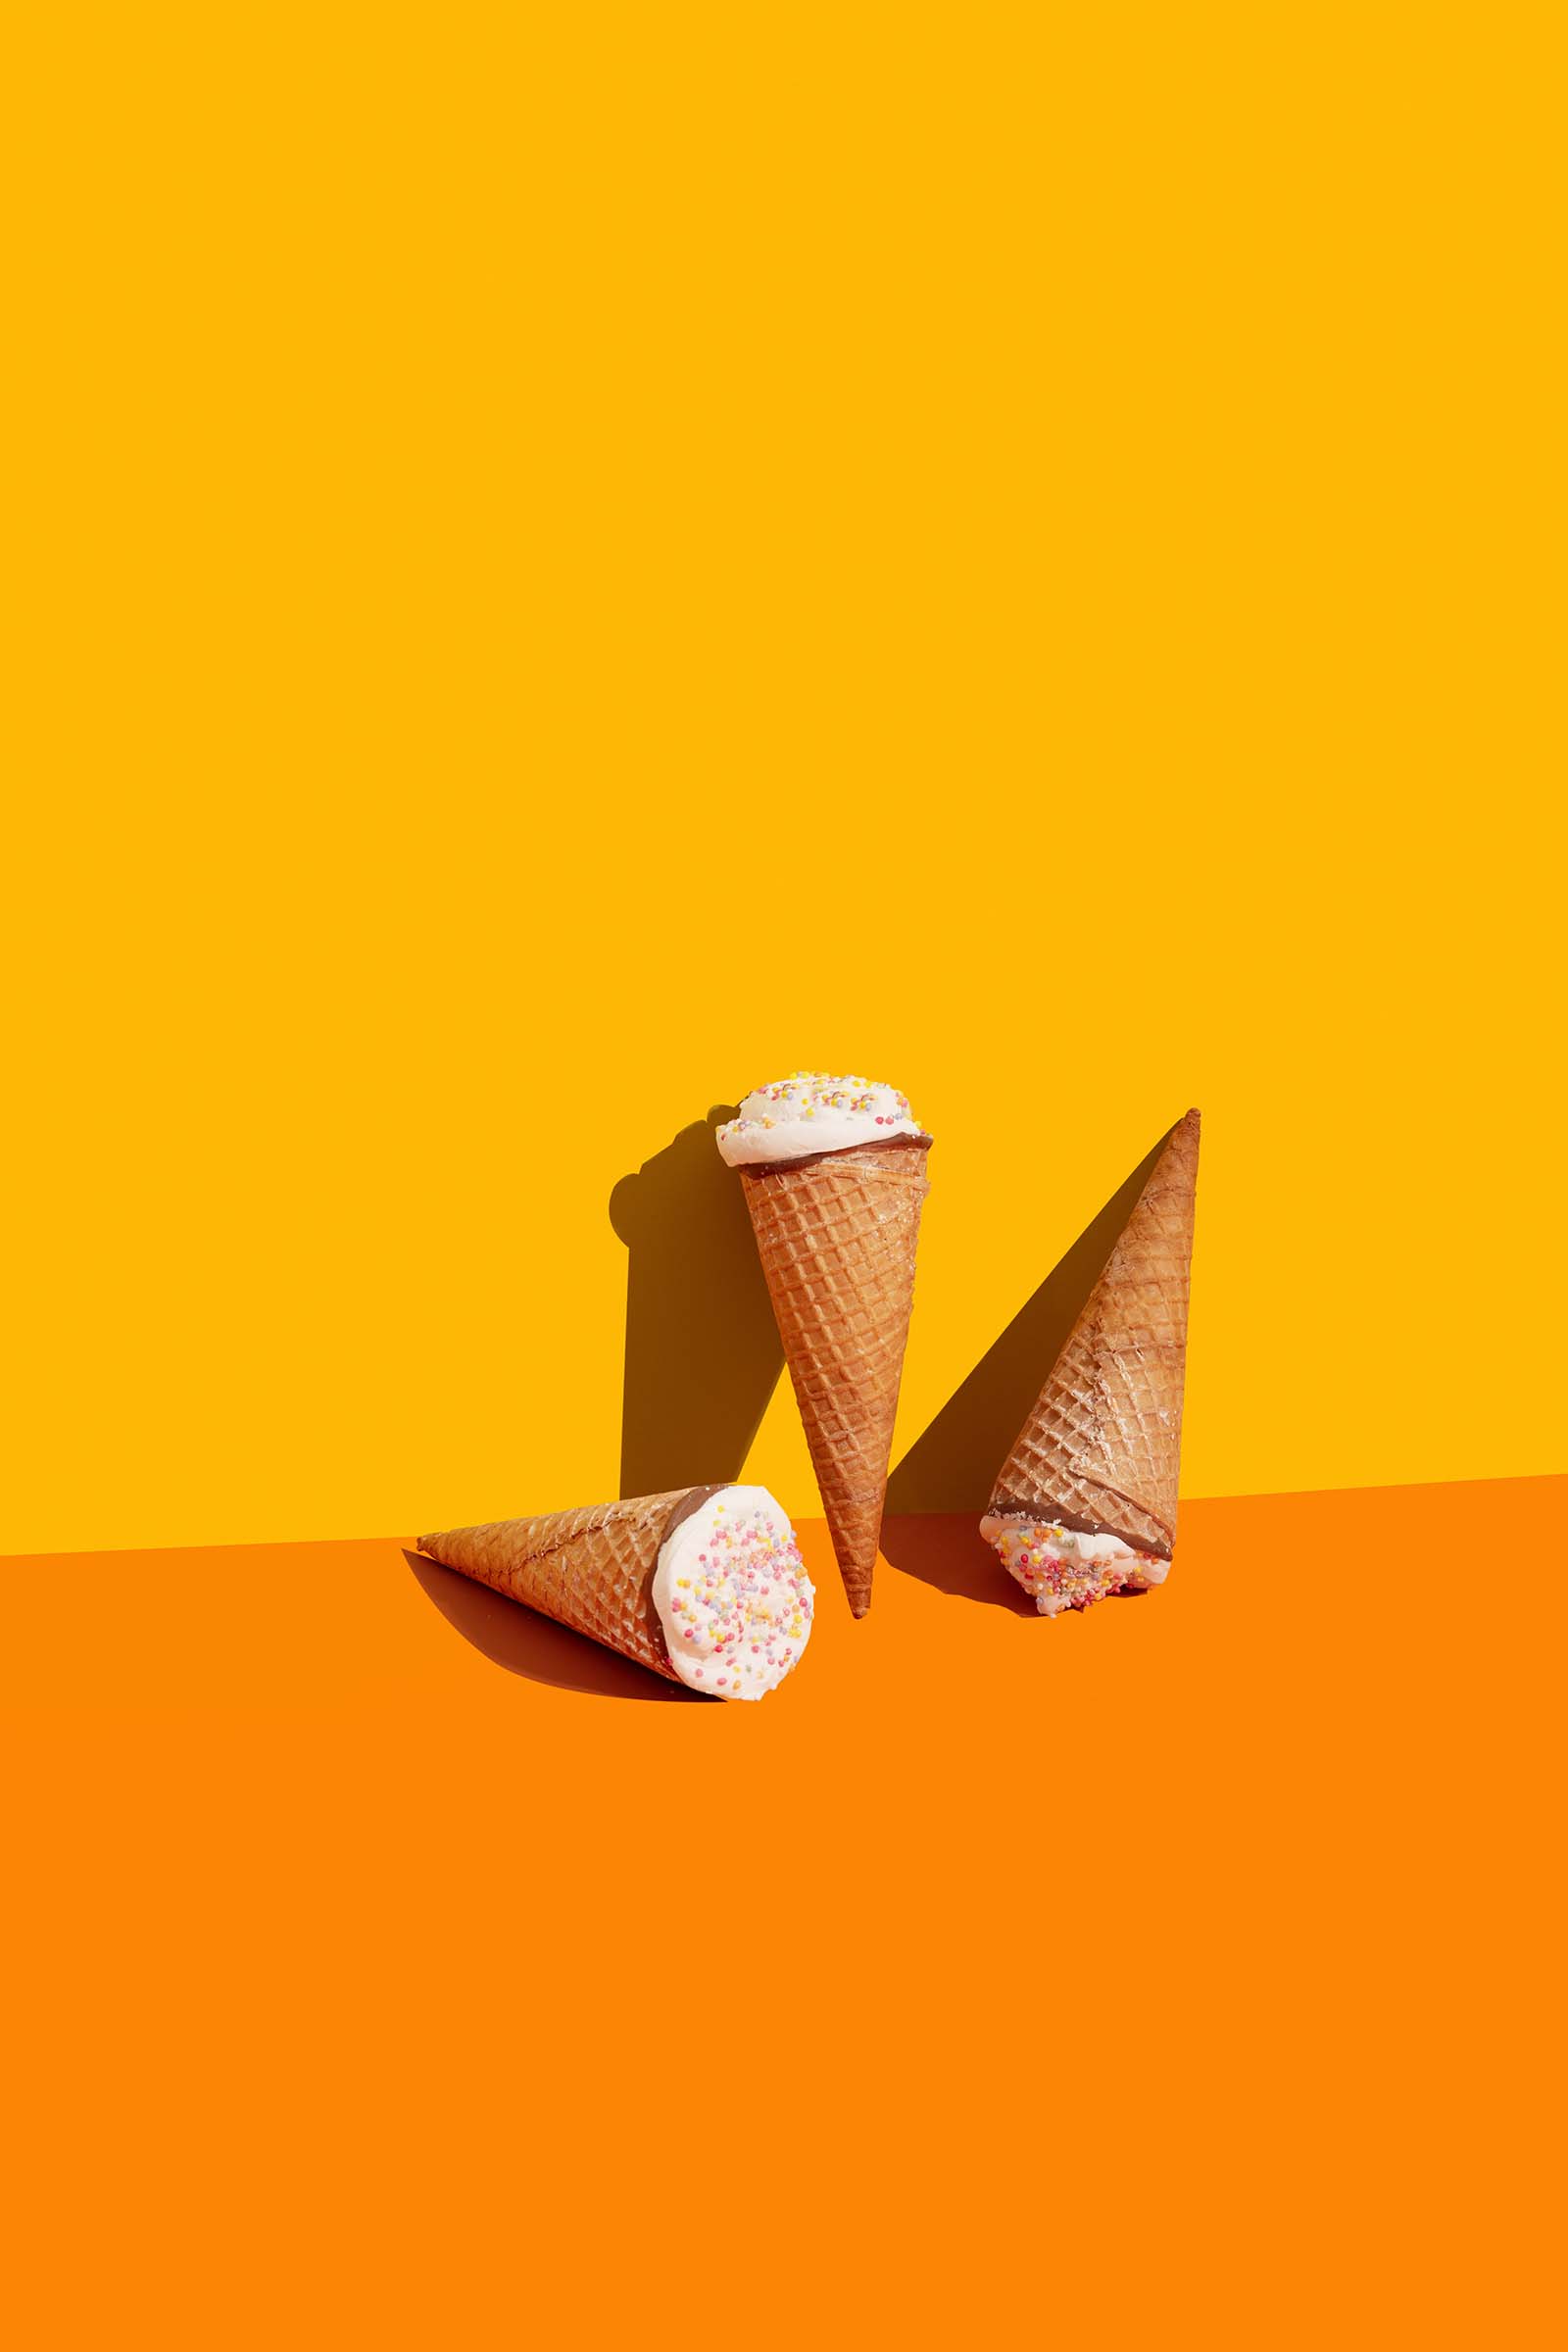 ice cream cone creative food photography. Styled food photo by colourpop studio